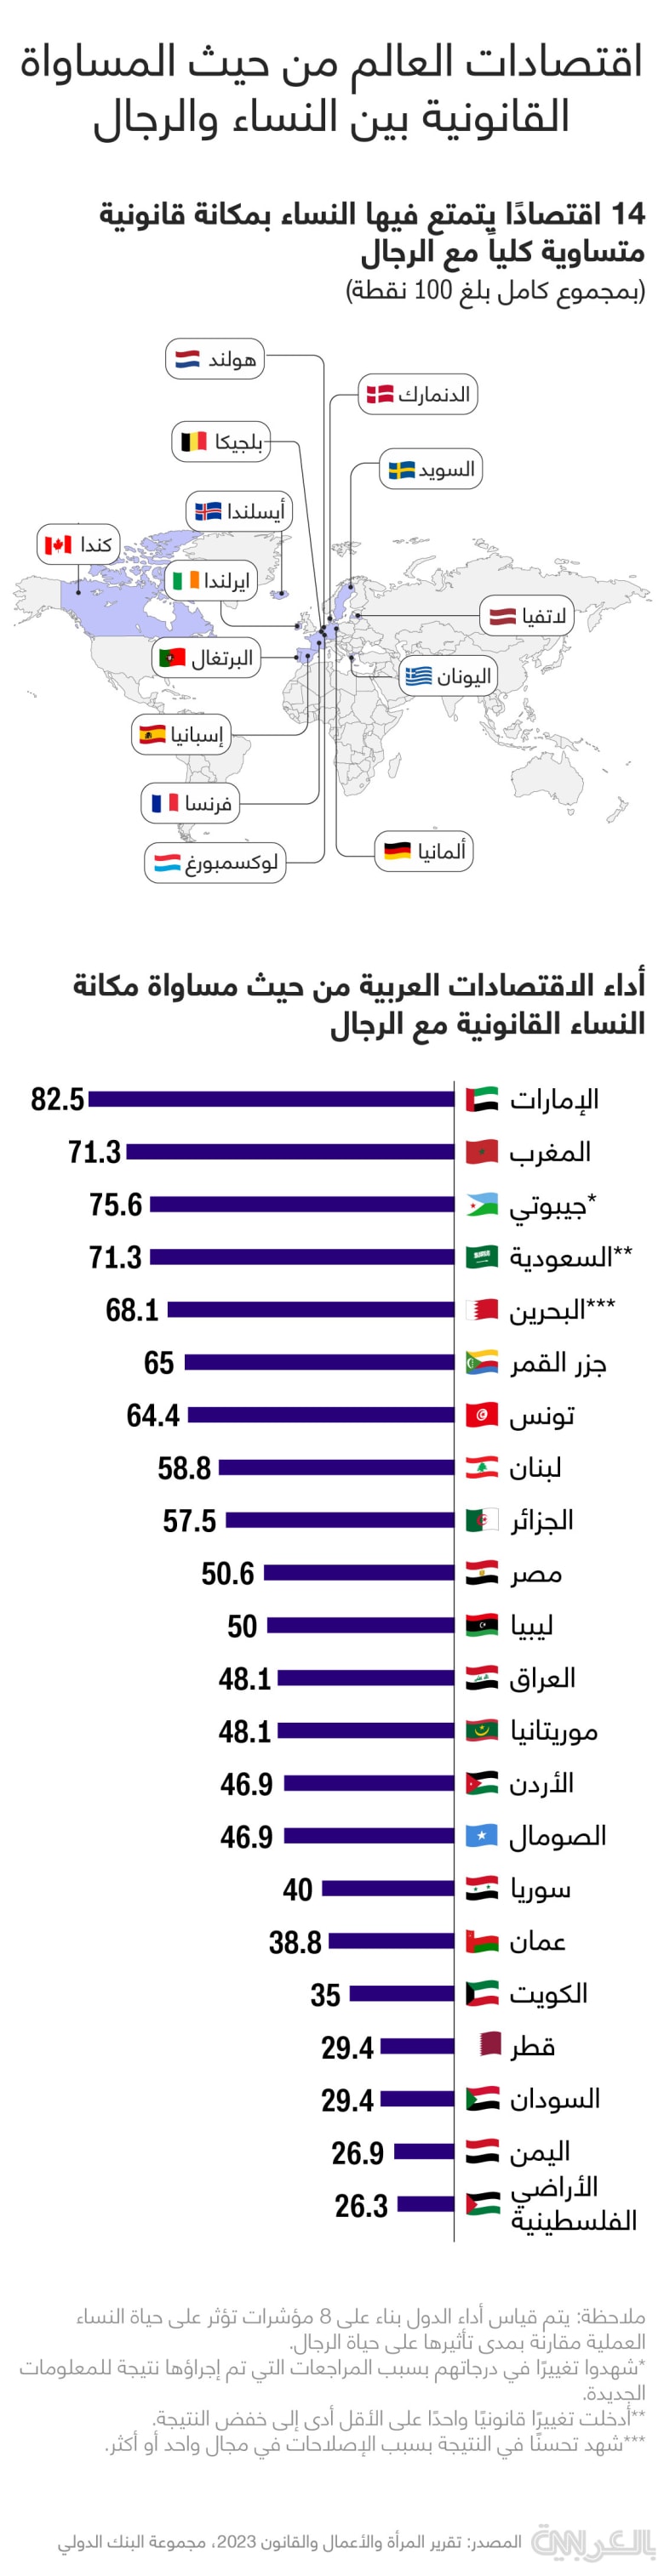 arab-top-economies-in-women-equality-23